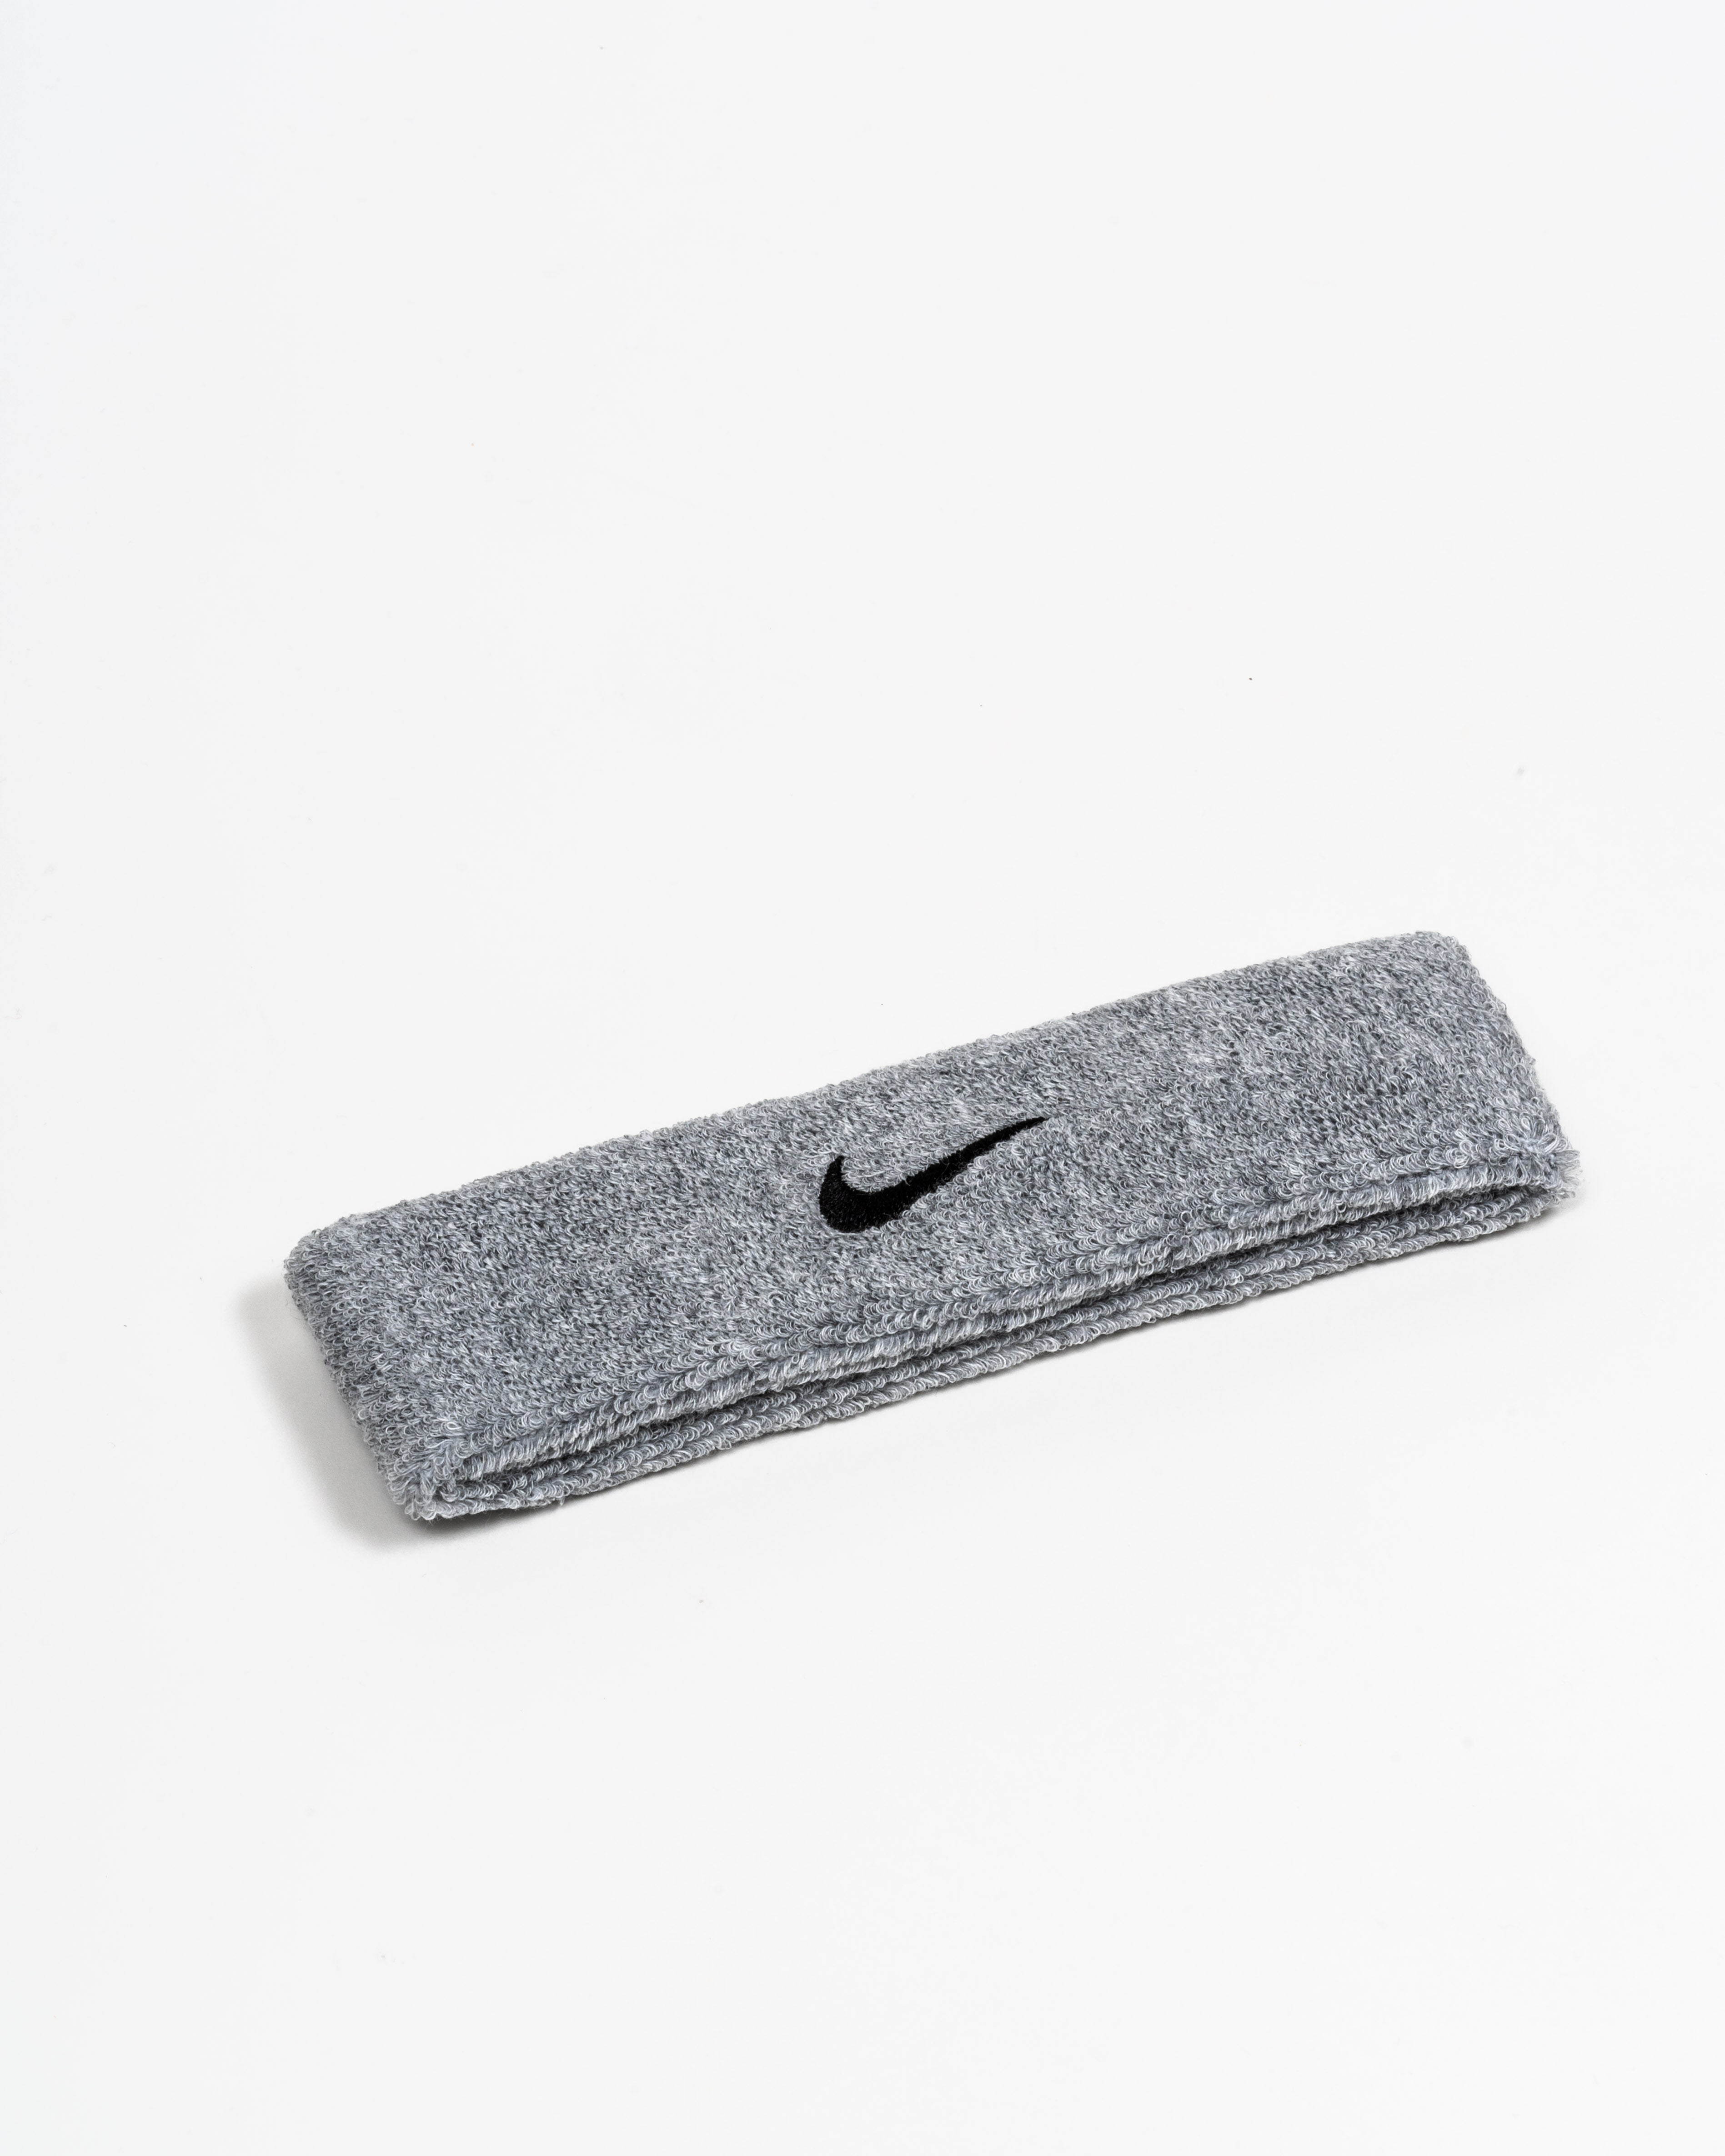 Nike Pandebånd